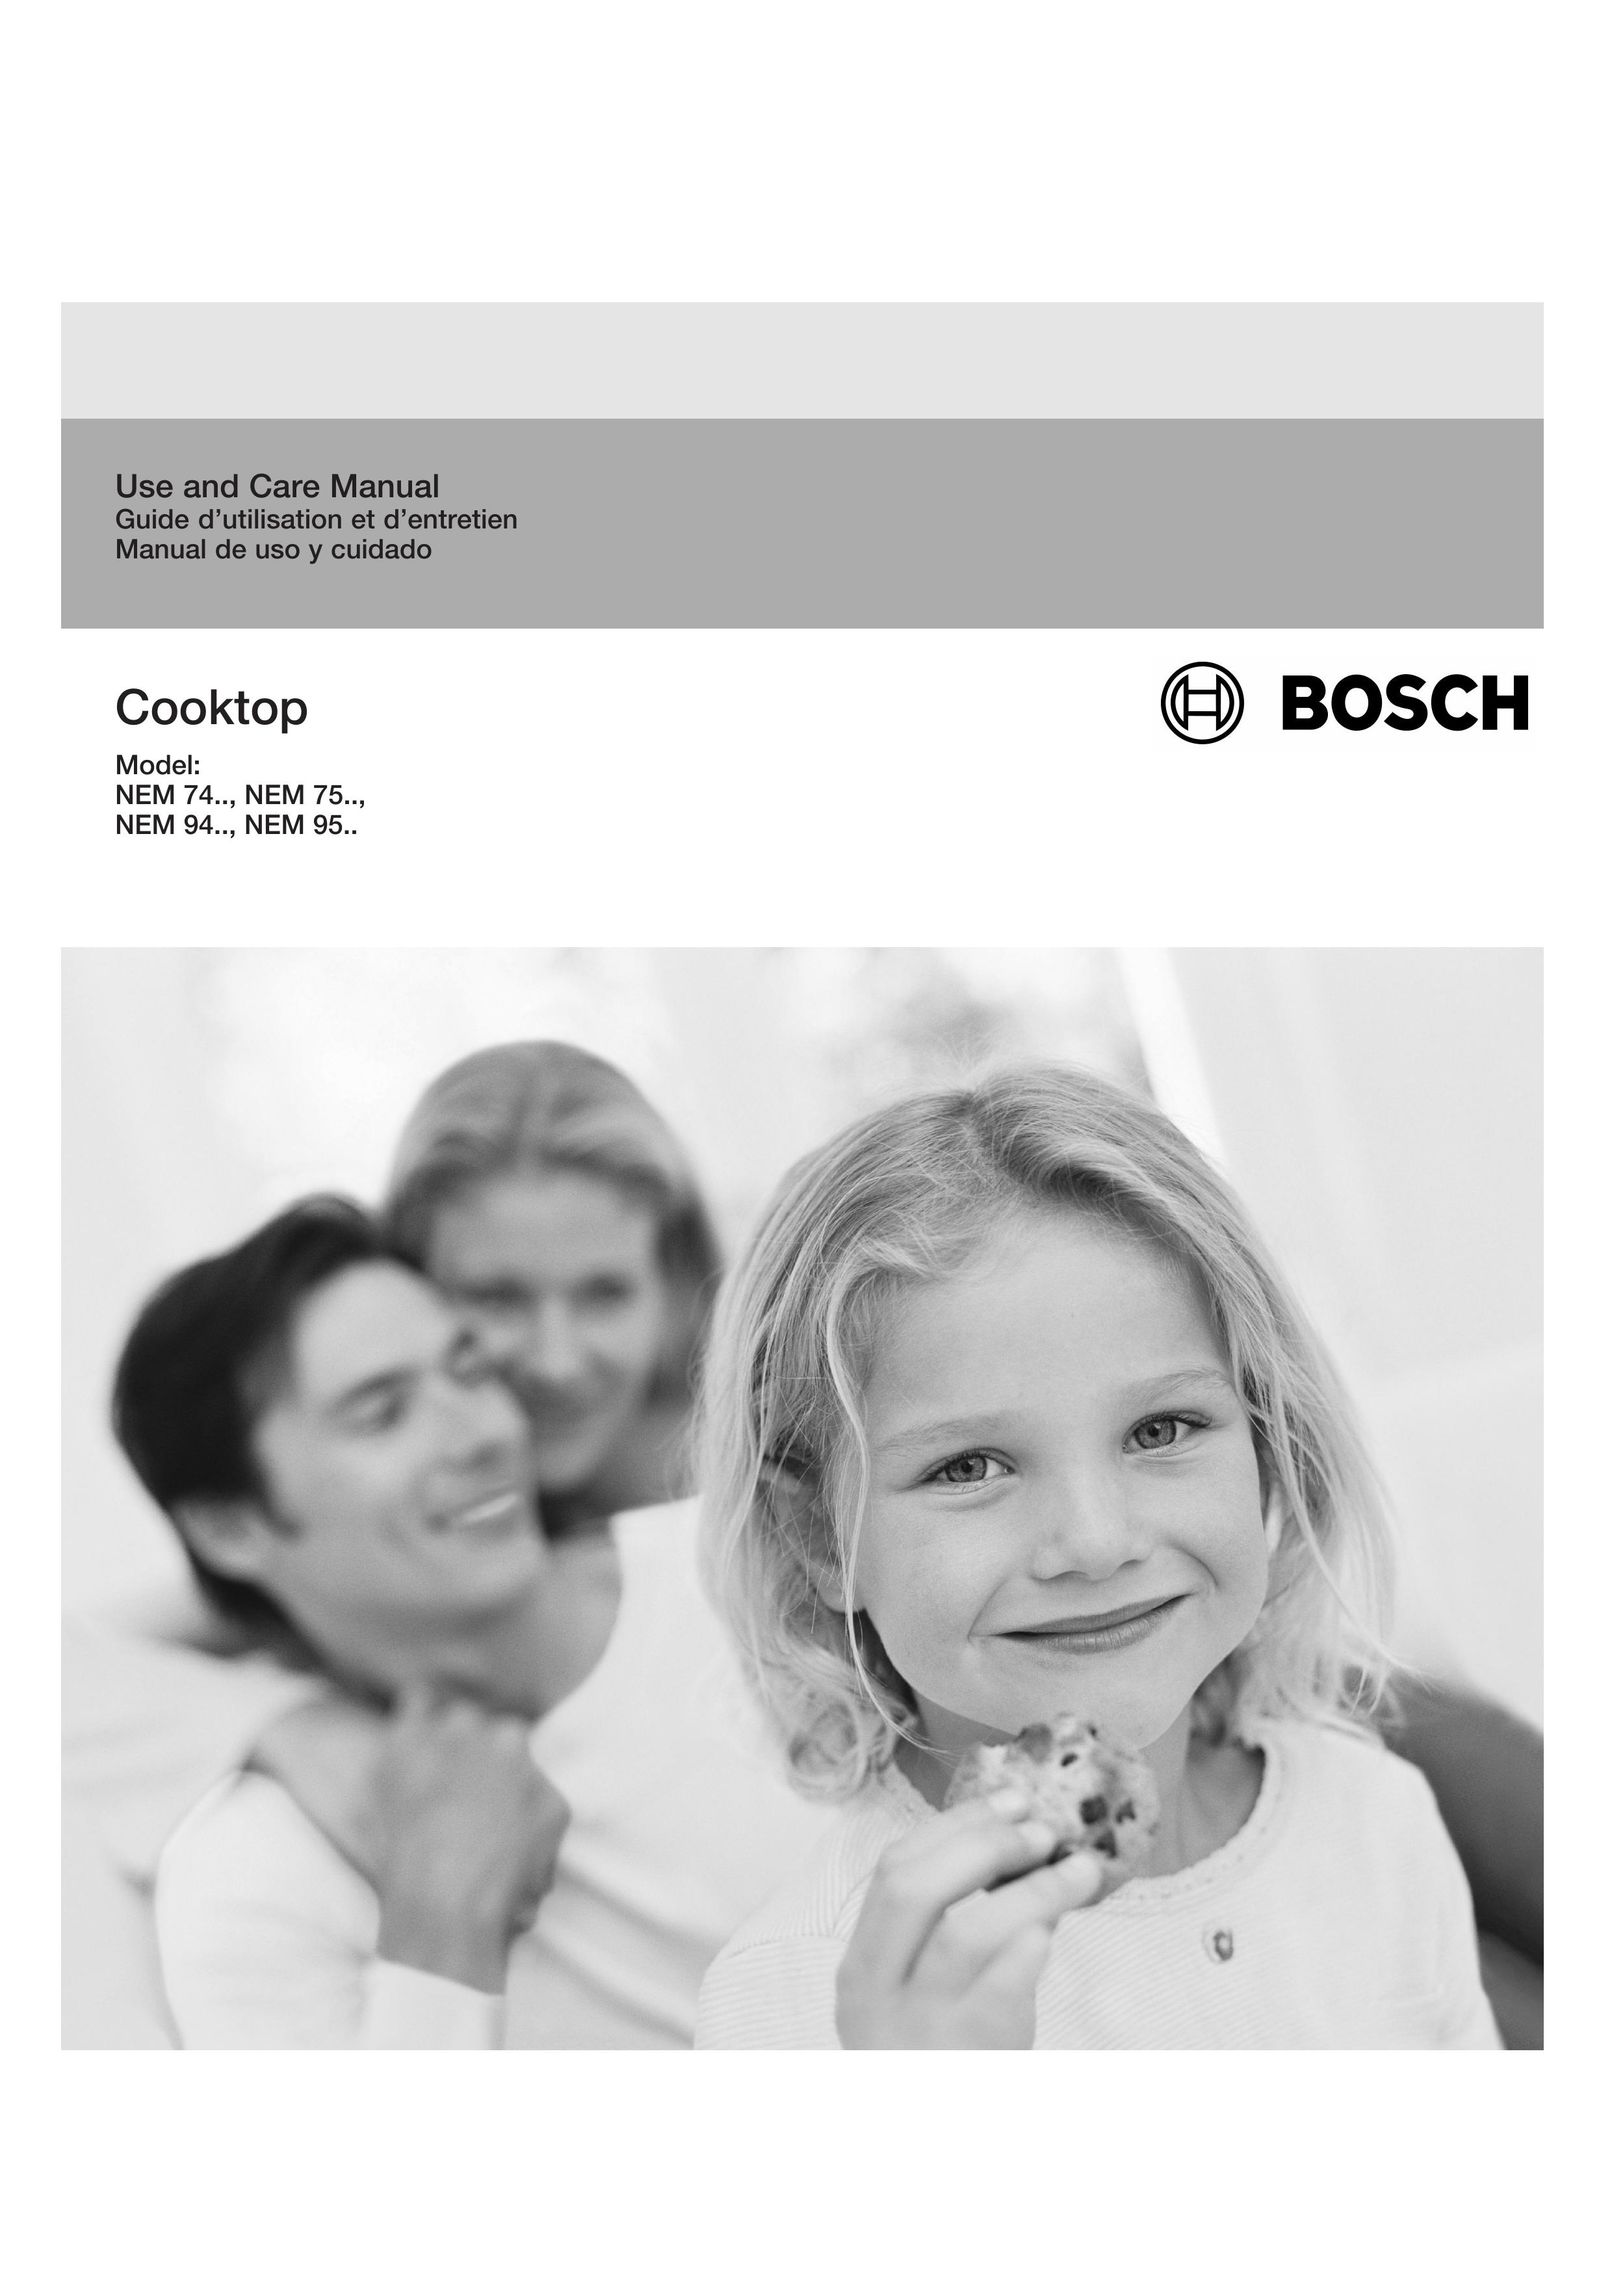 Bosch Appliances NEM 94 Cooktop User Manual